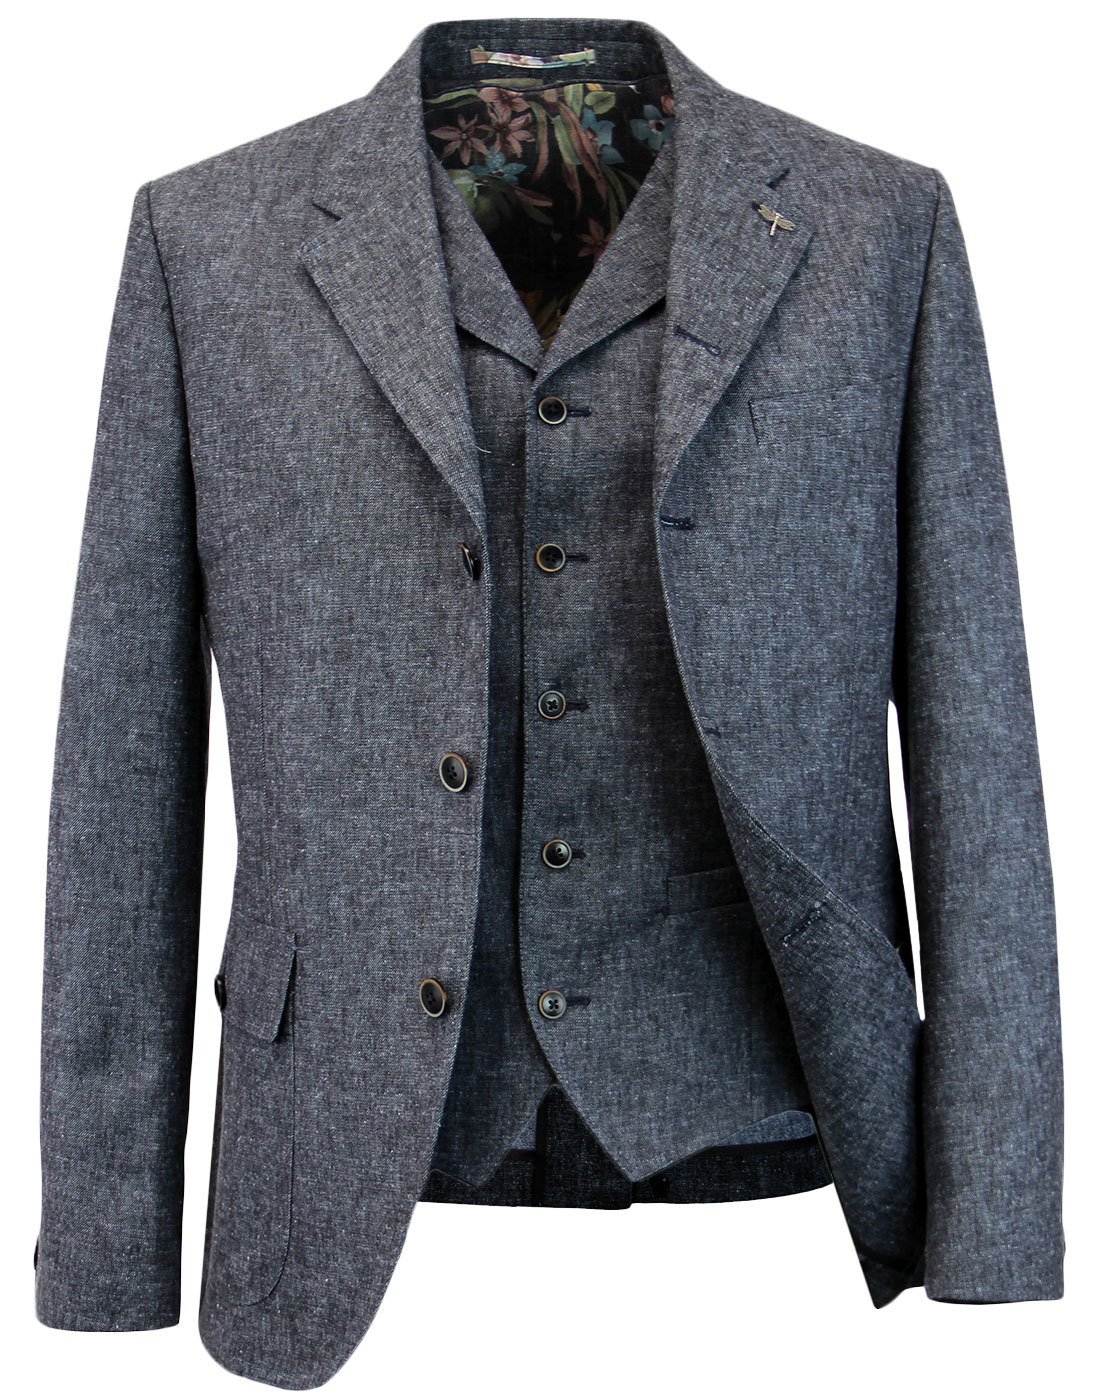 GIBSON LONDON Denim Linen Blazer & Waistcoat